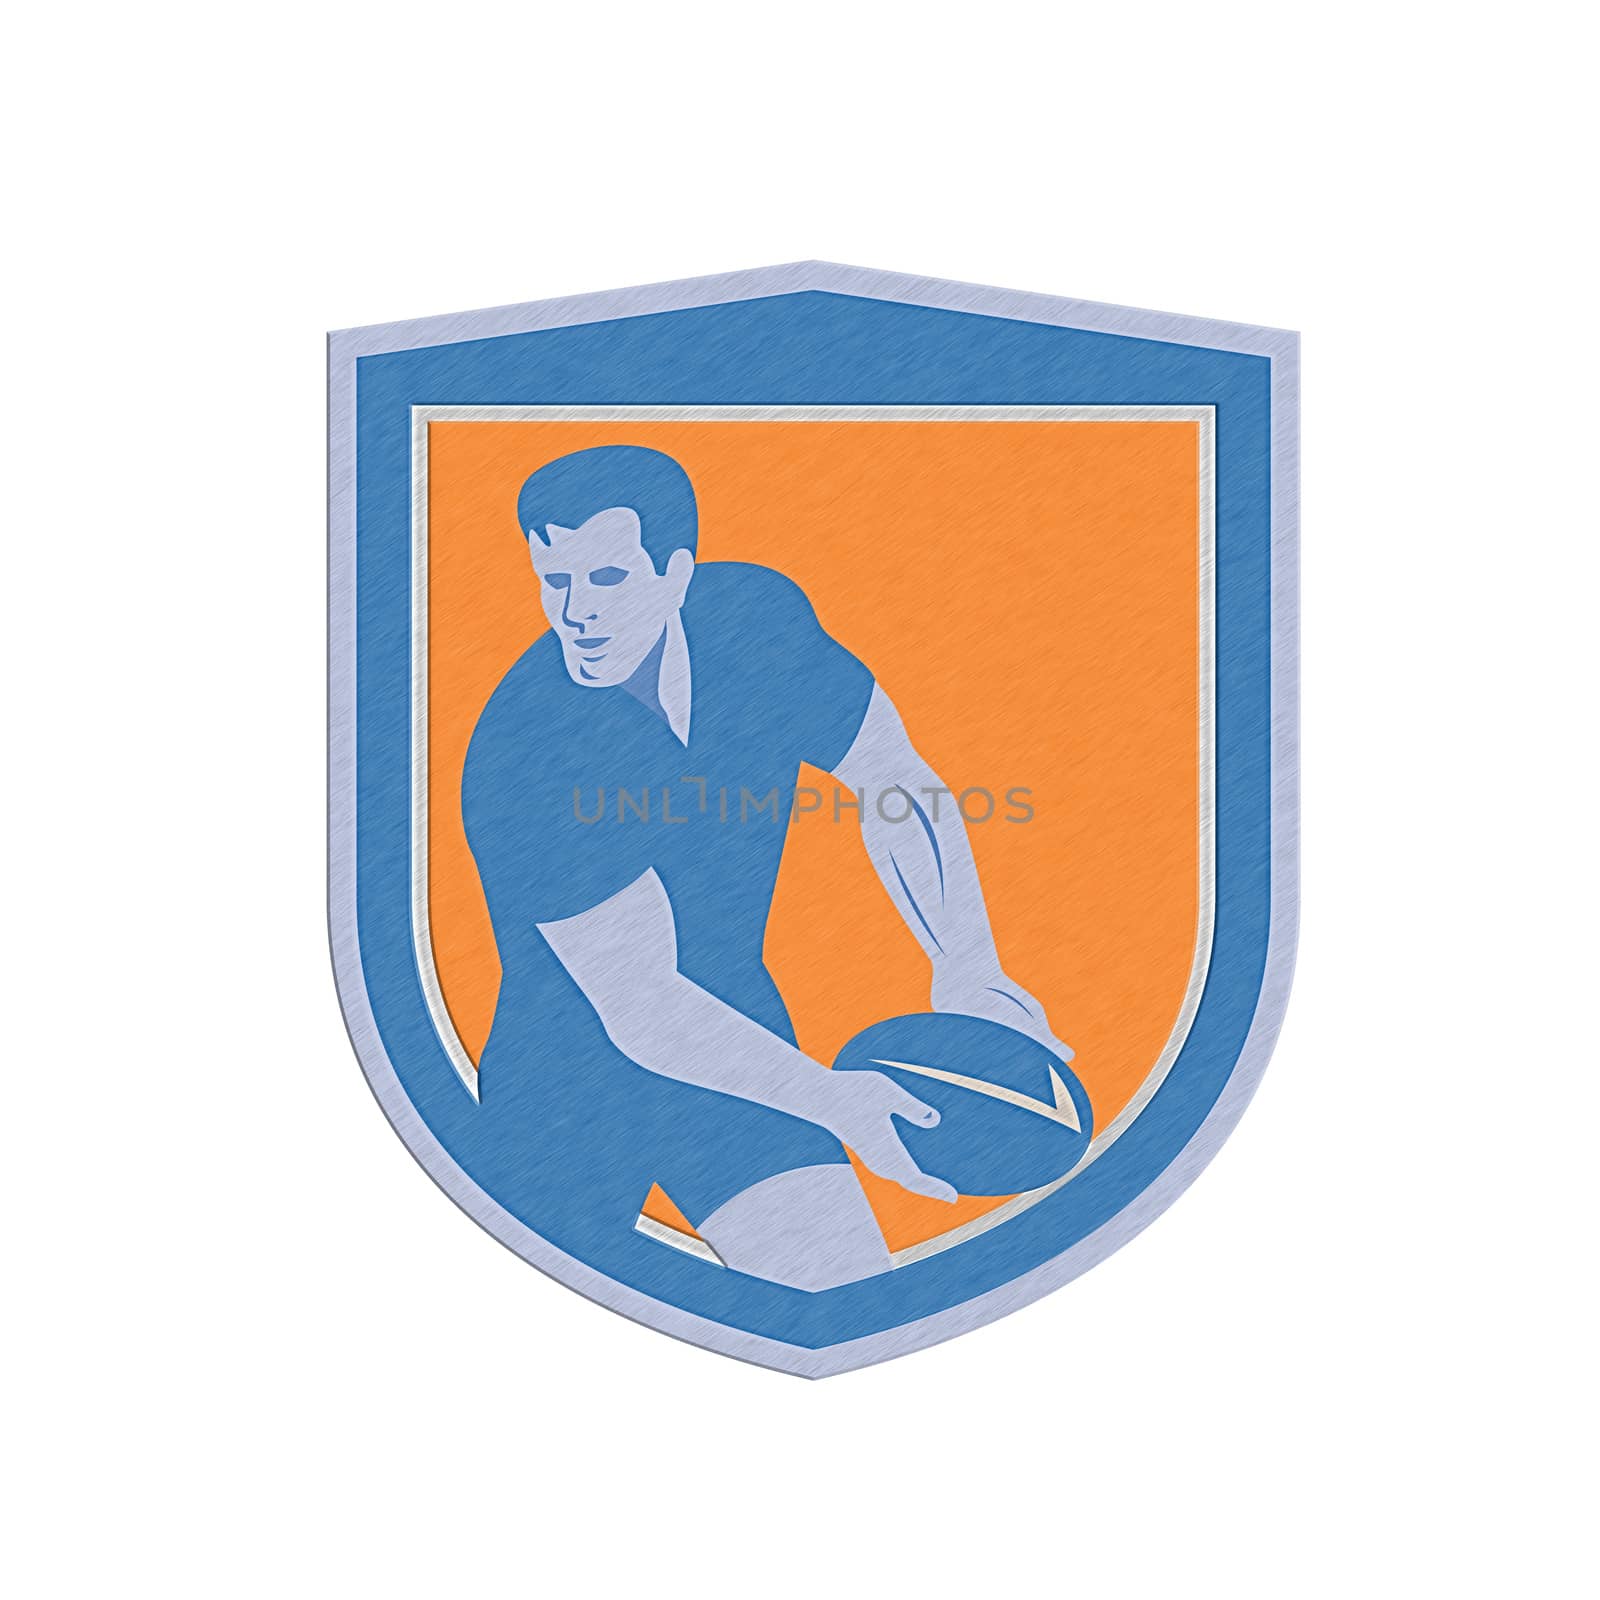 Metallic Rugby Player Passing Ball Shield Retro by patrimonio